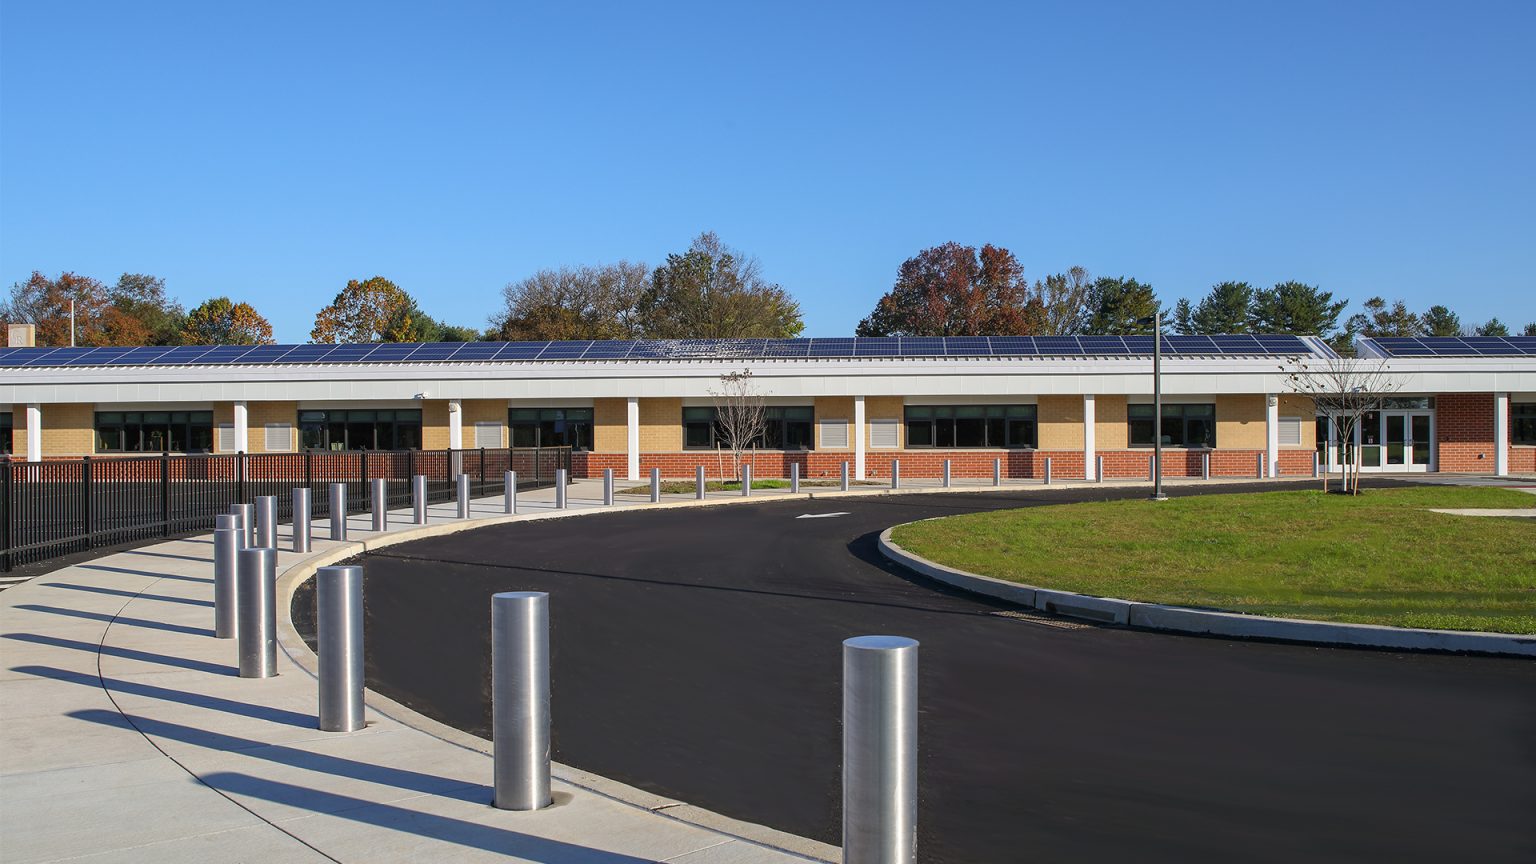 Council Rock School District’s Rolling Hills Elementary School